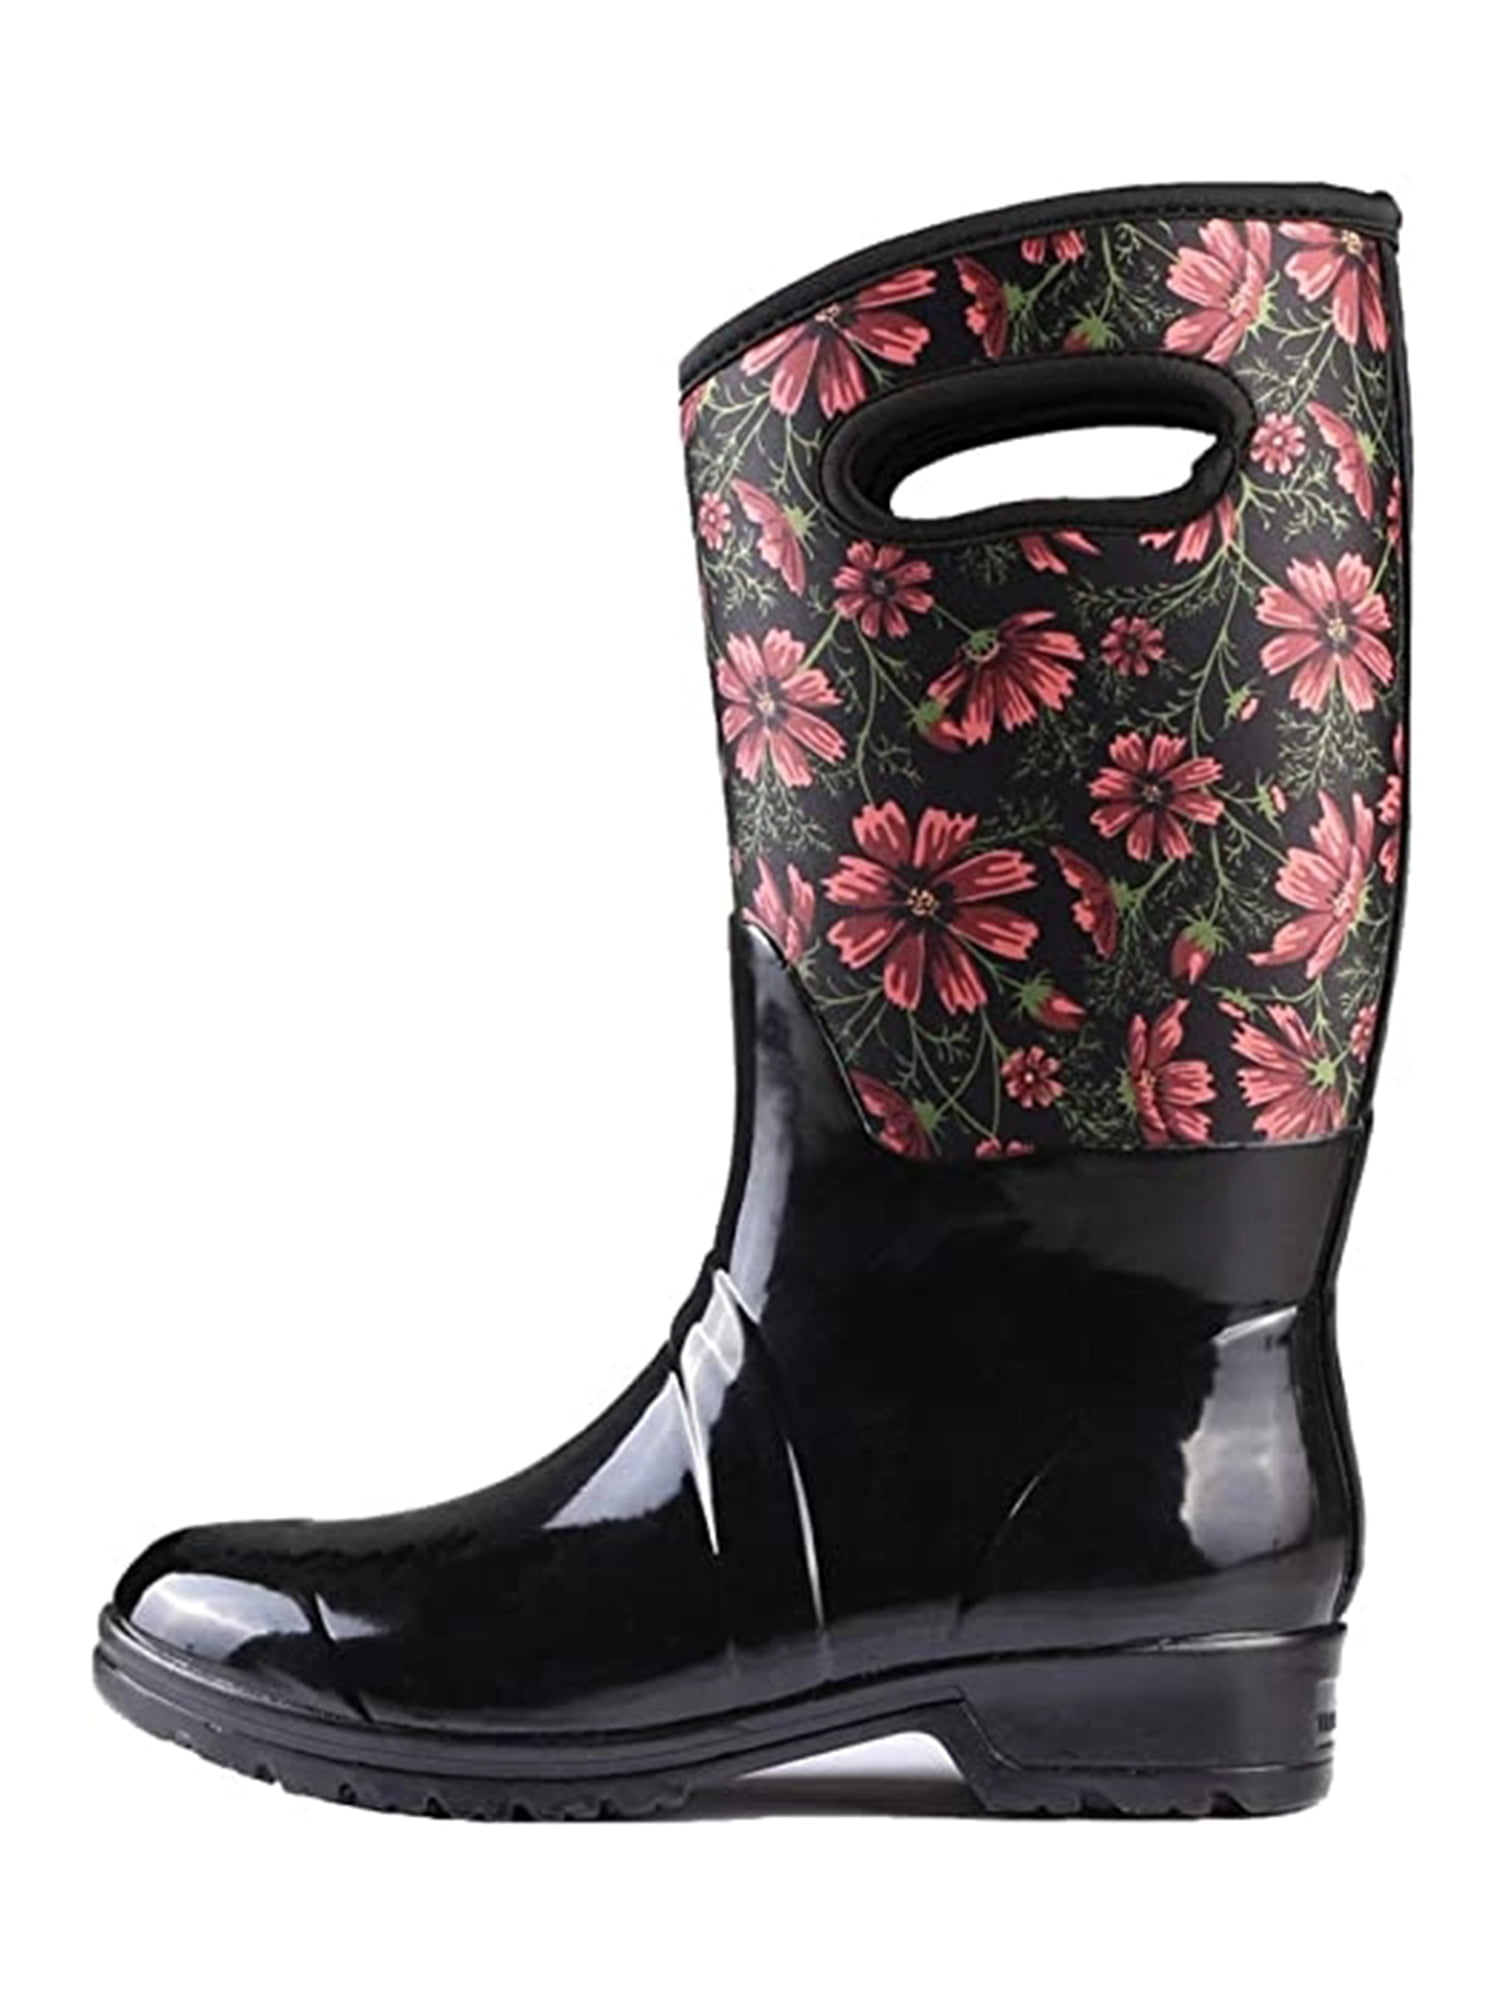 Own Shoe - OwnShoe Womens Slip Resistant Water Resistant Rain Boots ...